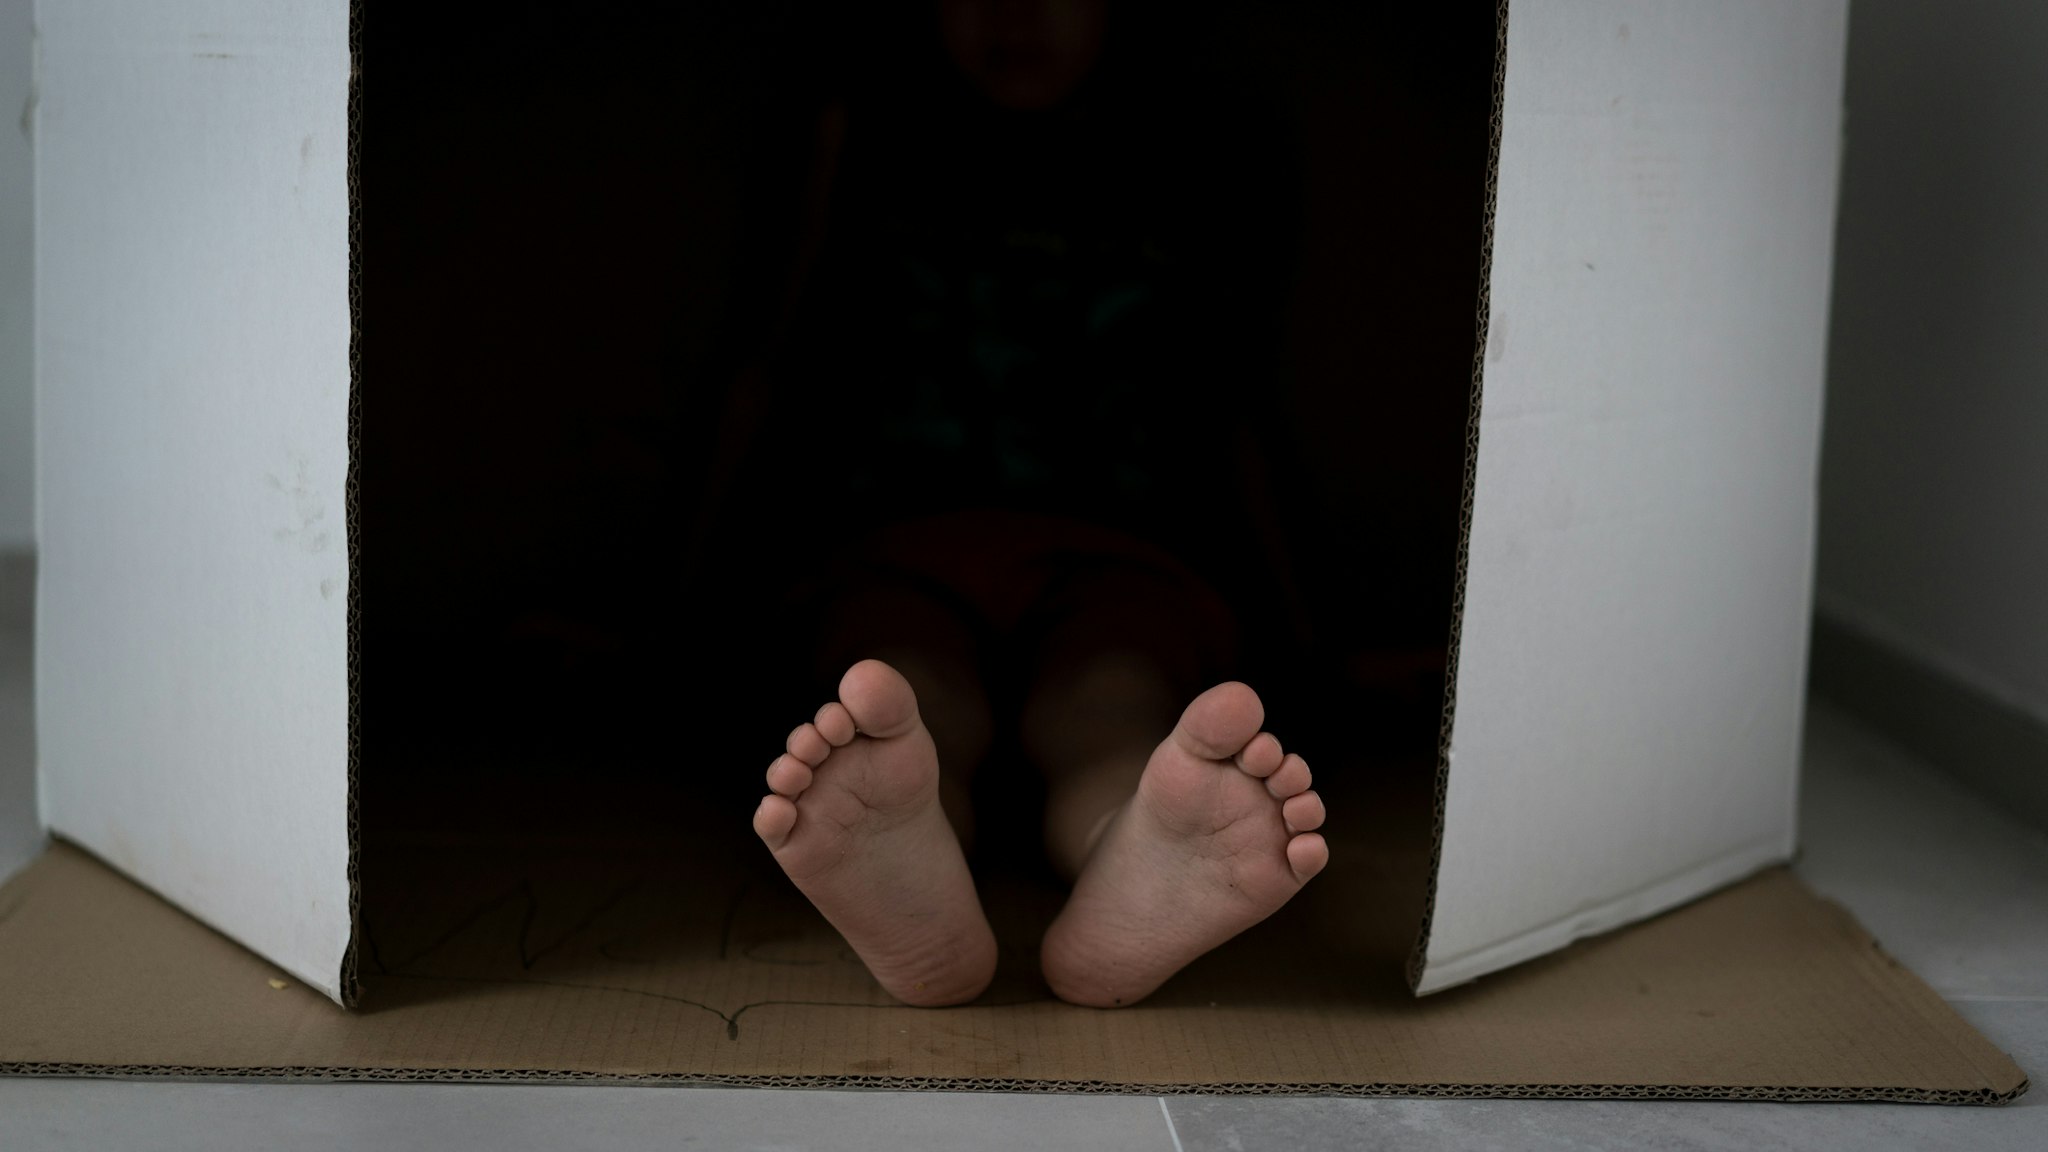 Child feet in carton box - stock photo